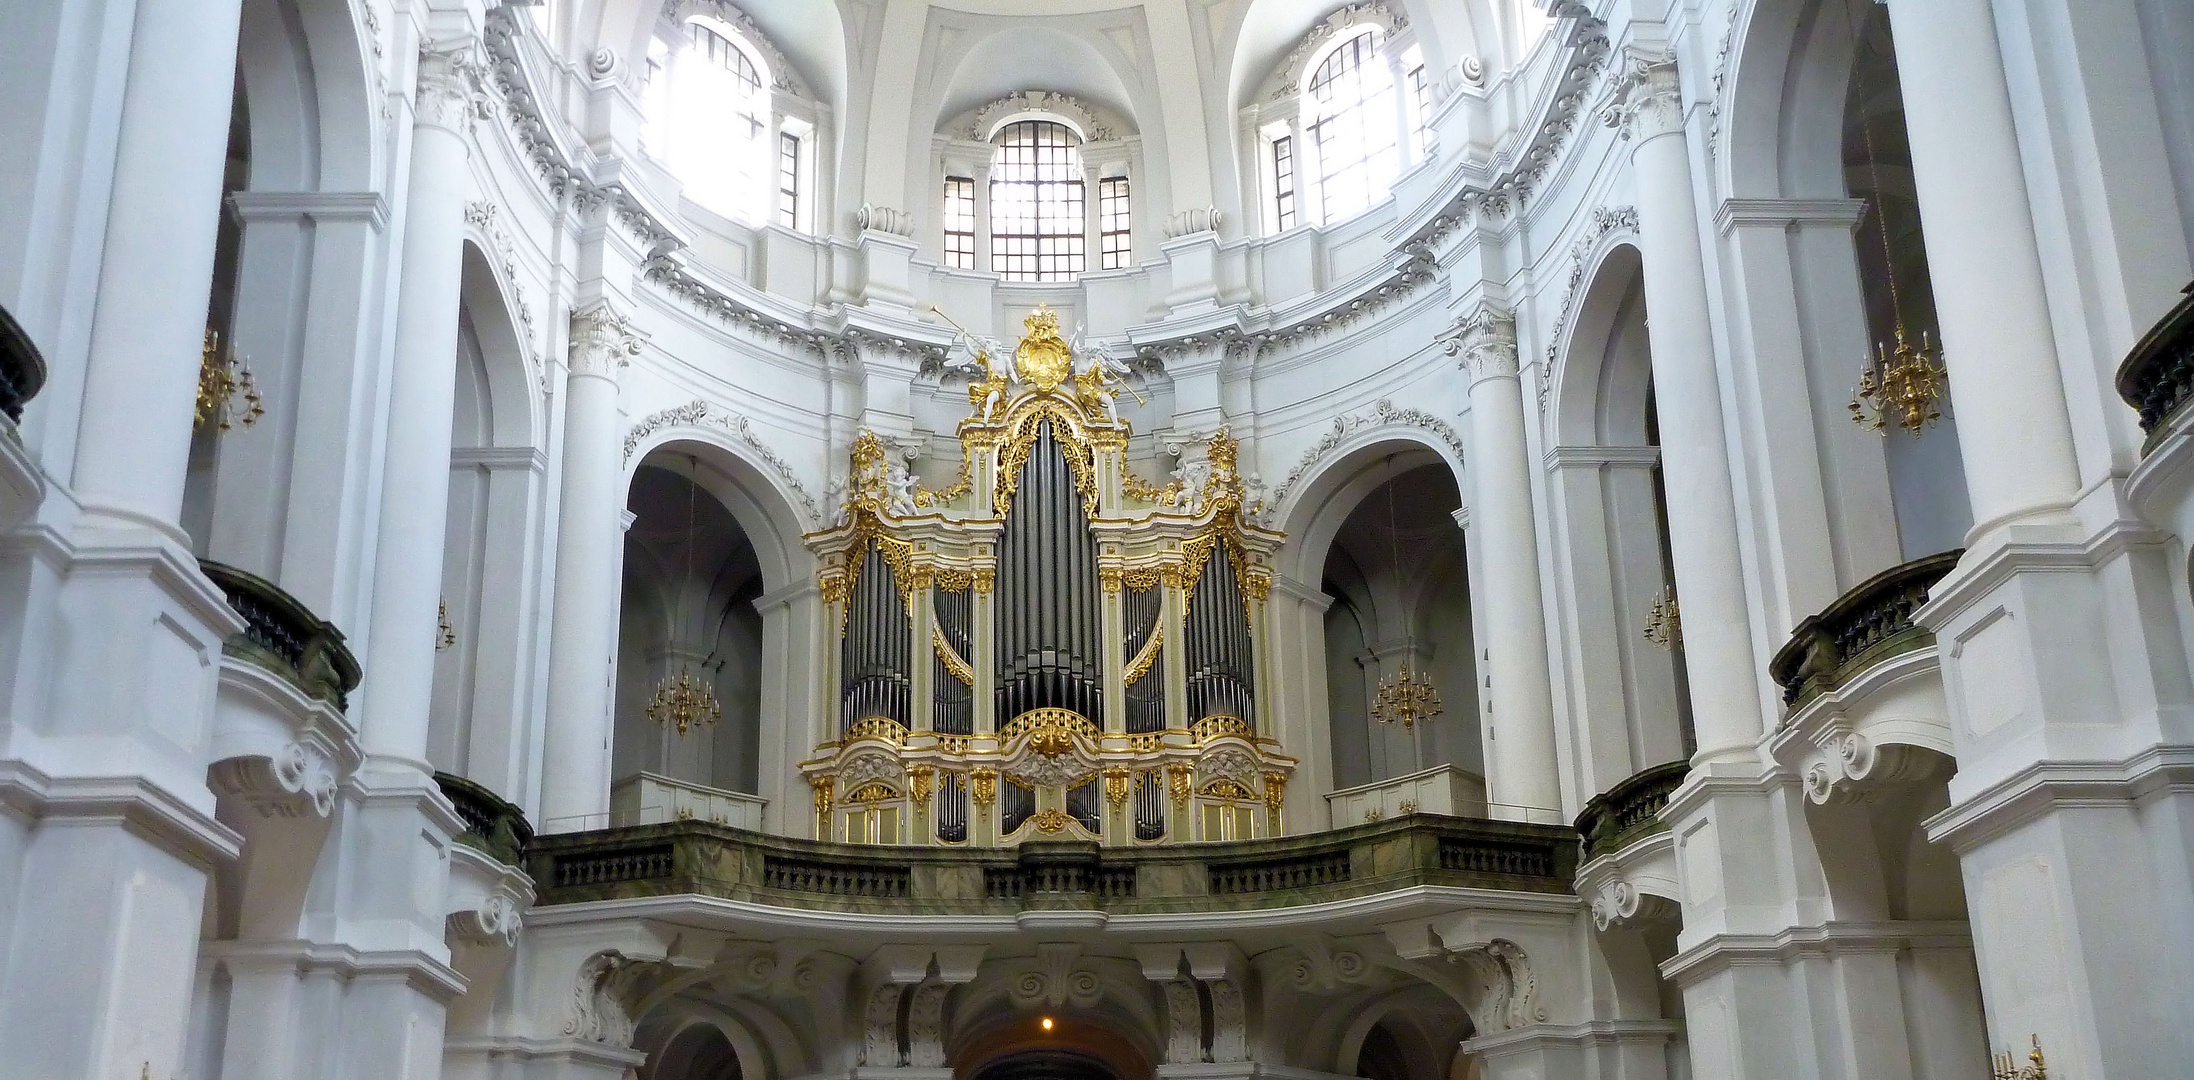 Hofkirche in Dresden...